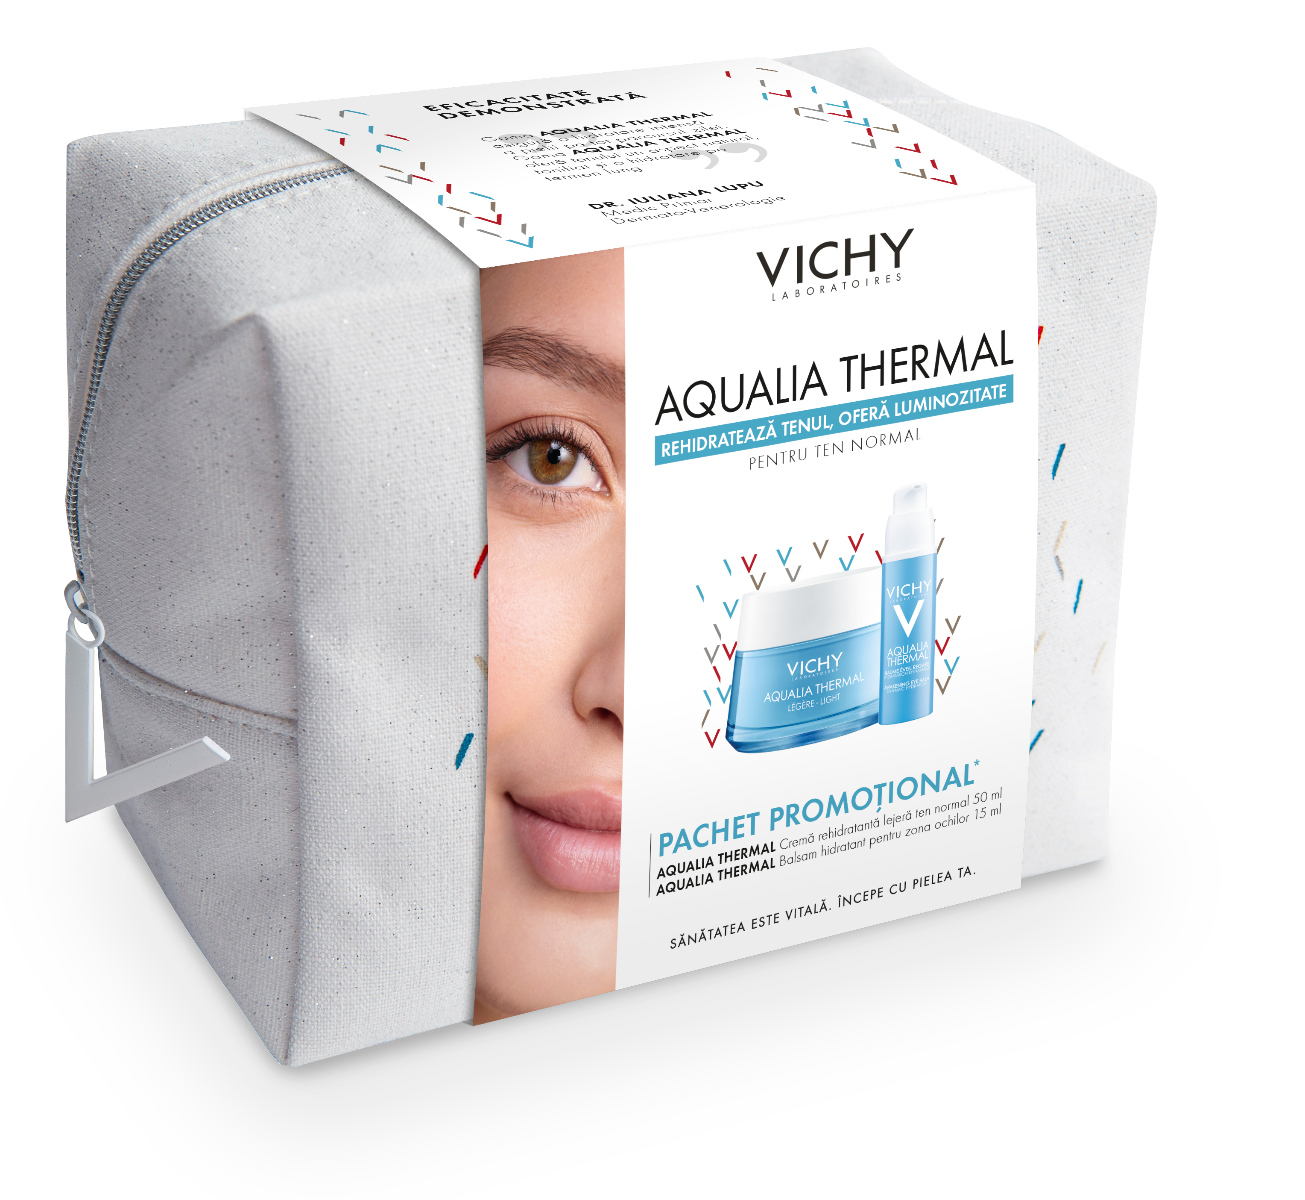 Pachet Promotional Aqualia Thermal ten normal 50ml + Balsam hidratant pentru zona ochilor Aqualia Thermal 15ml, Vichy